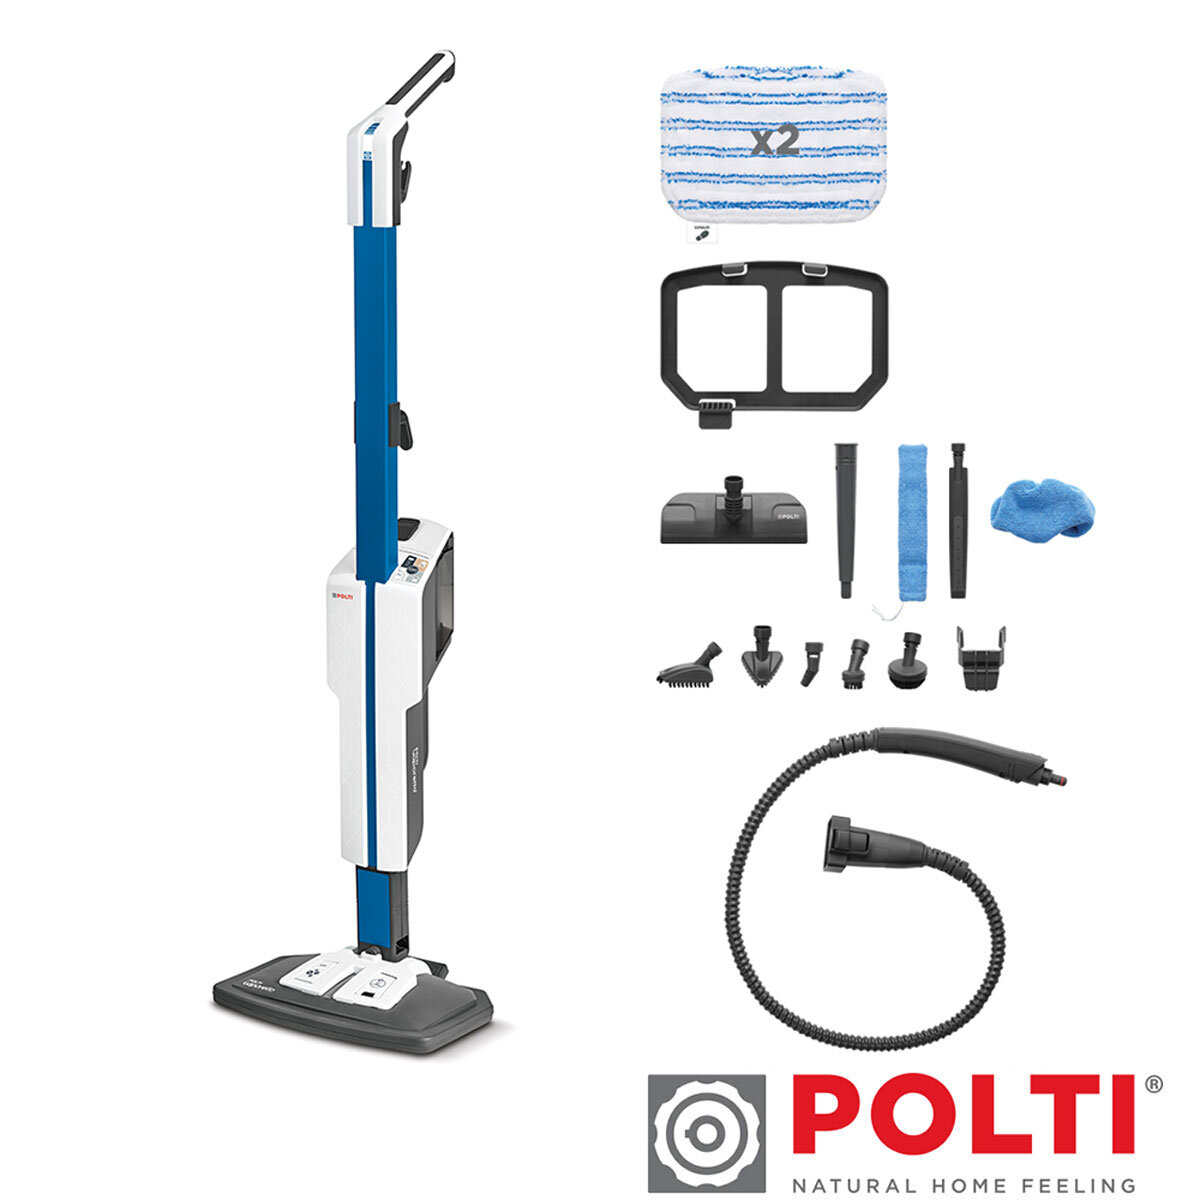 Vaporetto Easy Plus Portable Steamer by Polti - Complete